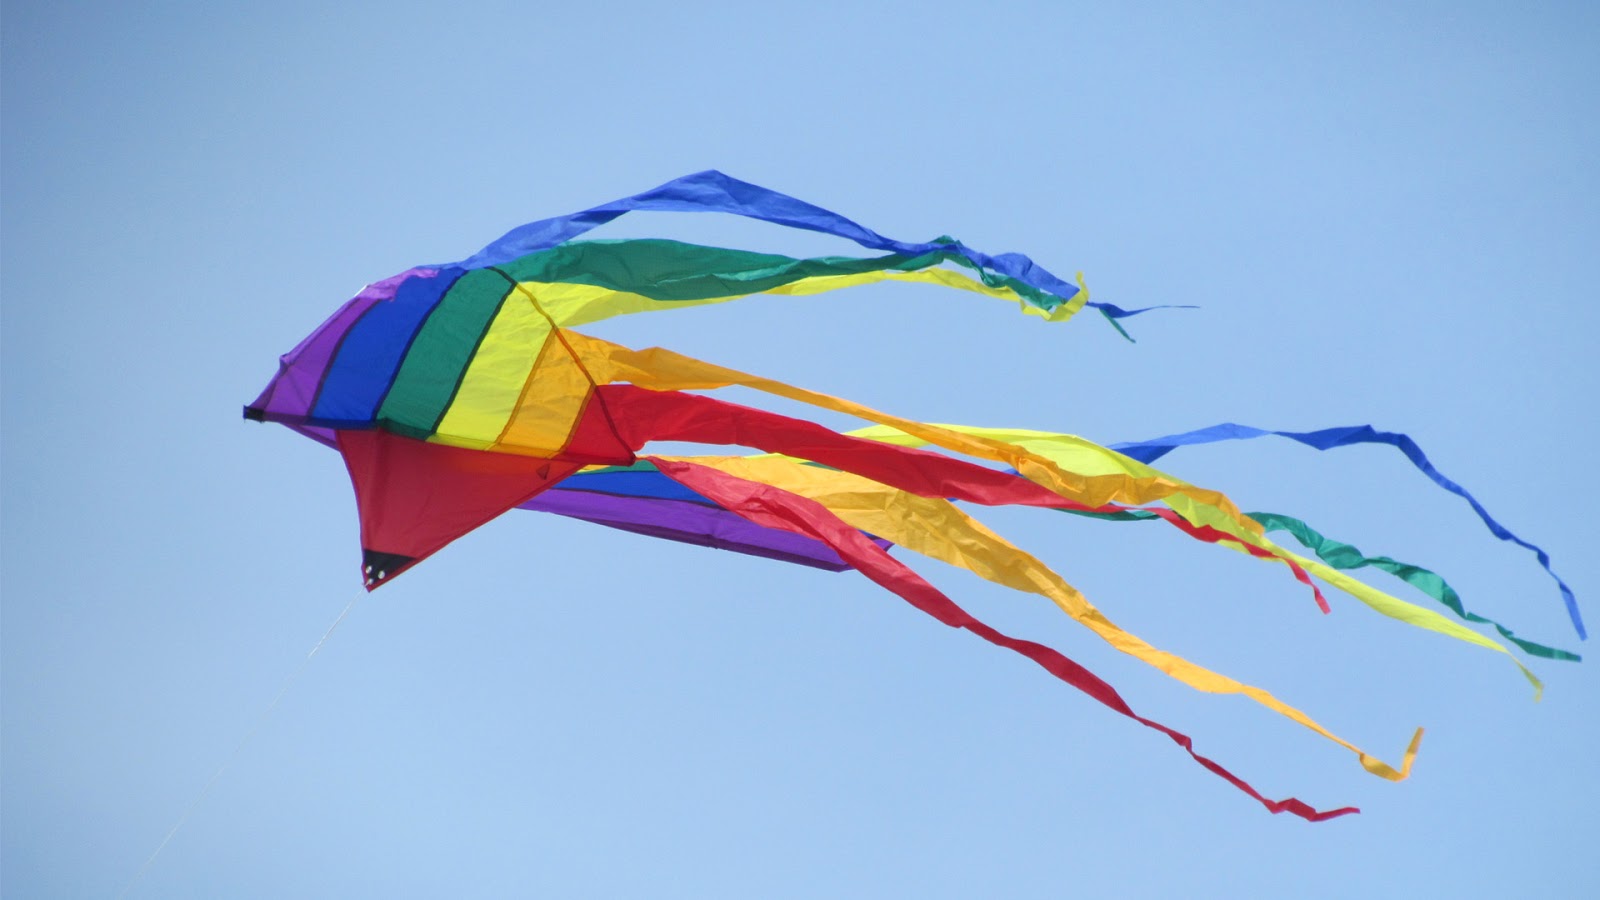 kite wallpaper,kite,sport kite,kite sports,sky